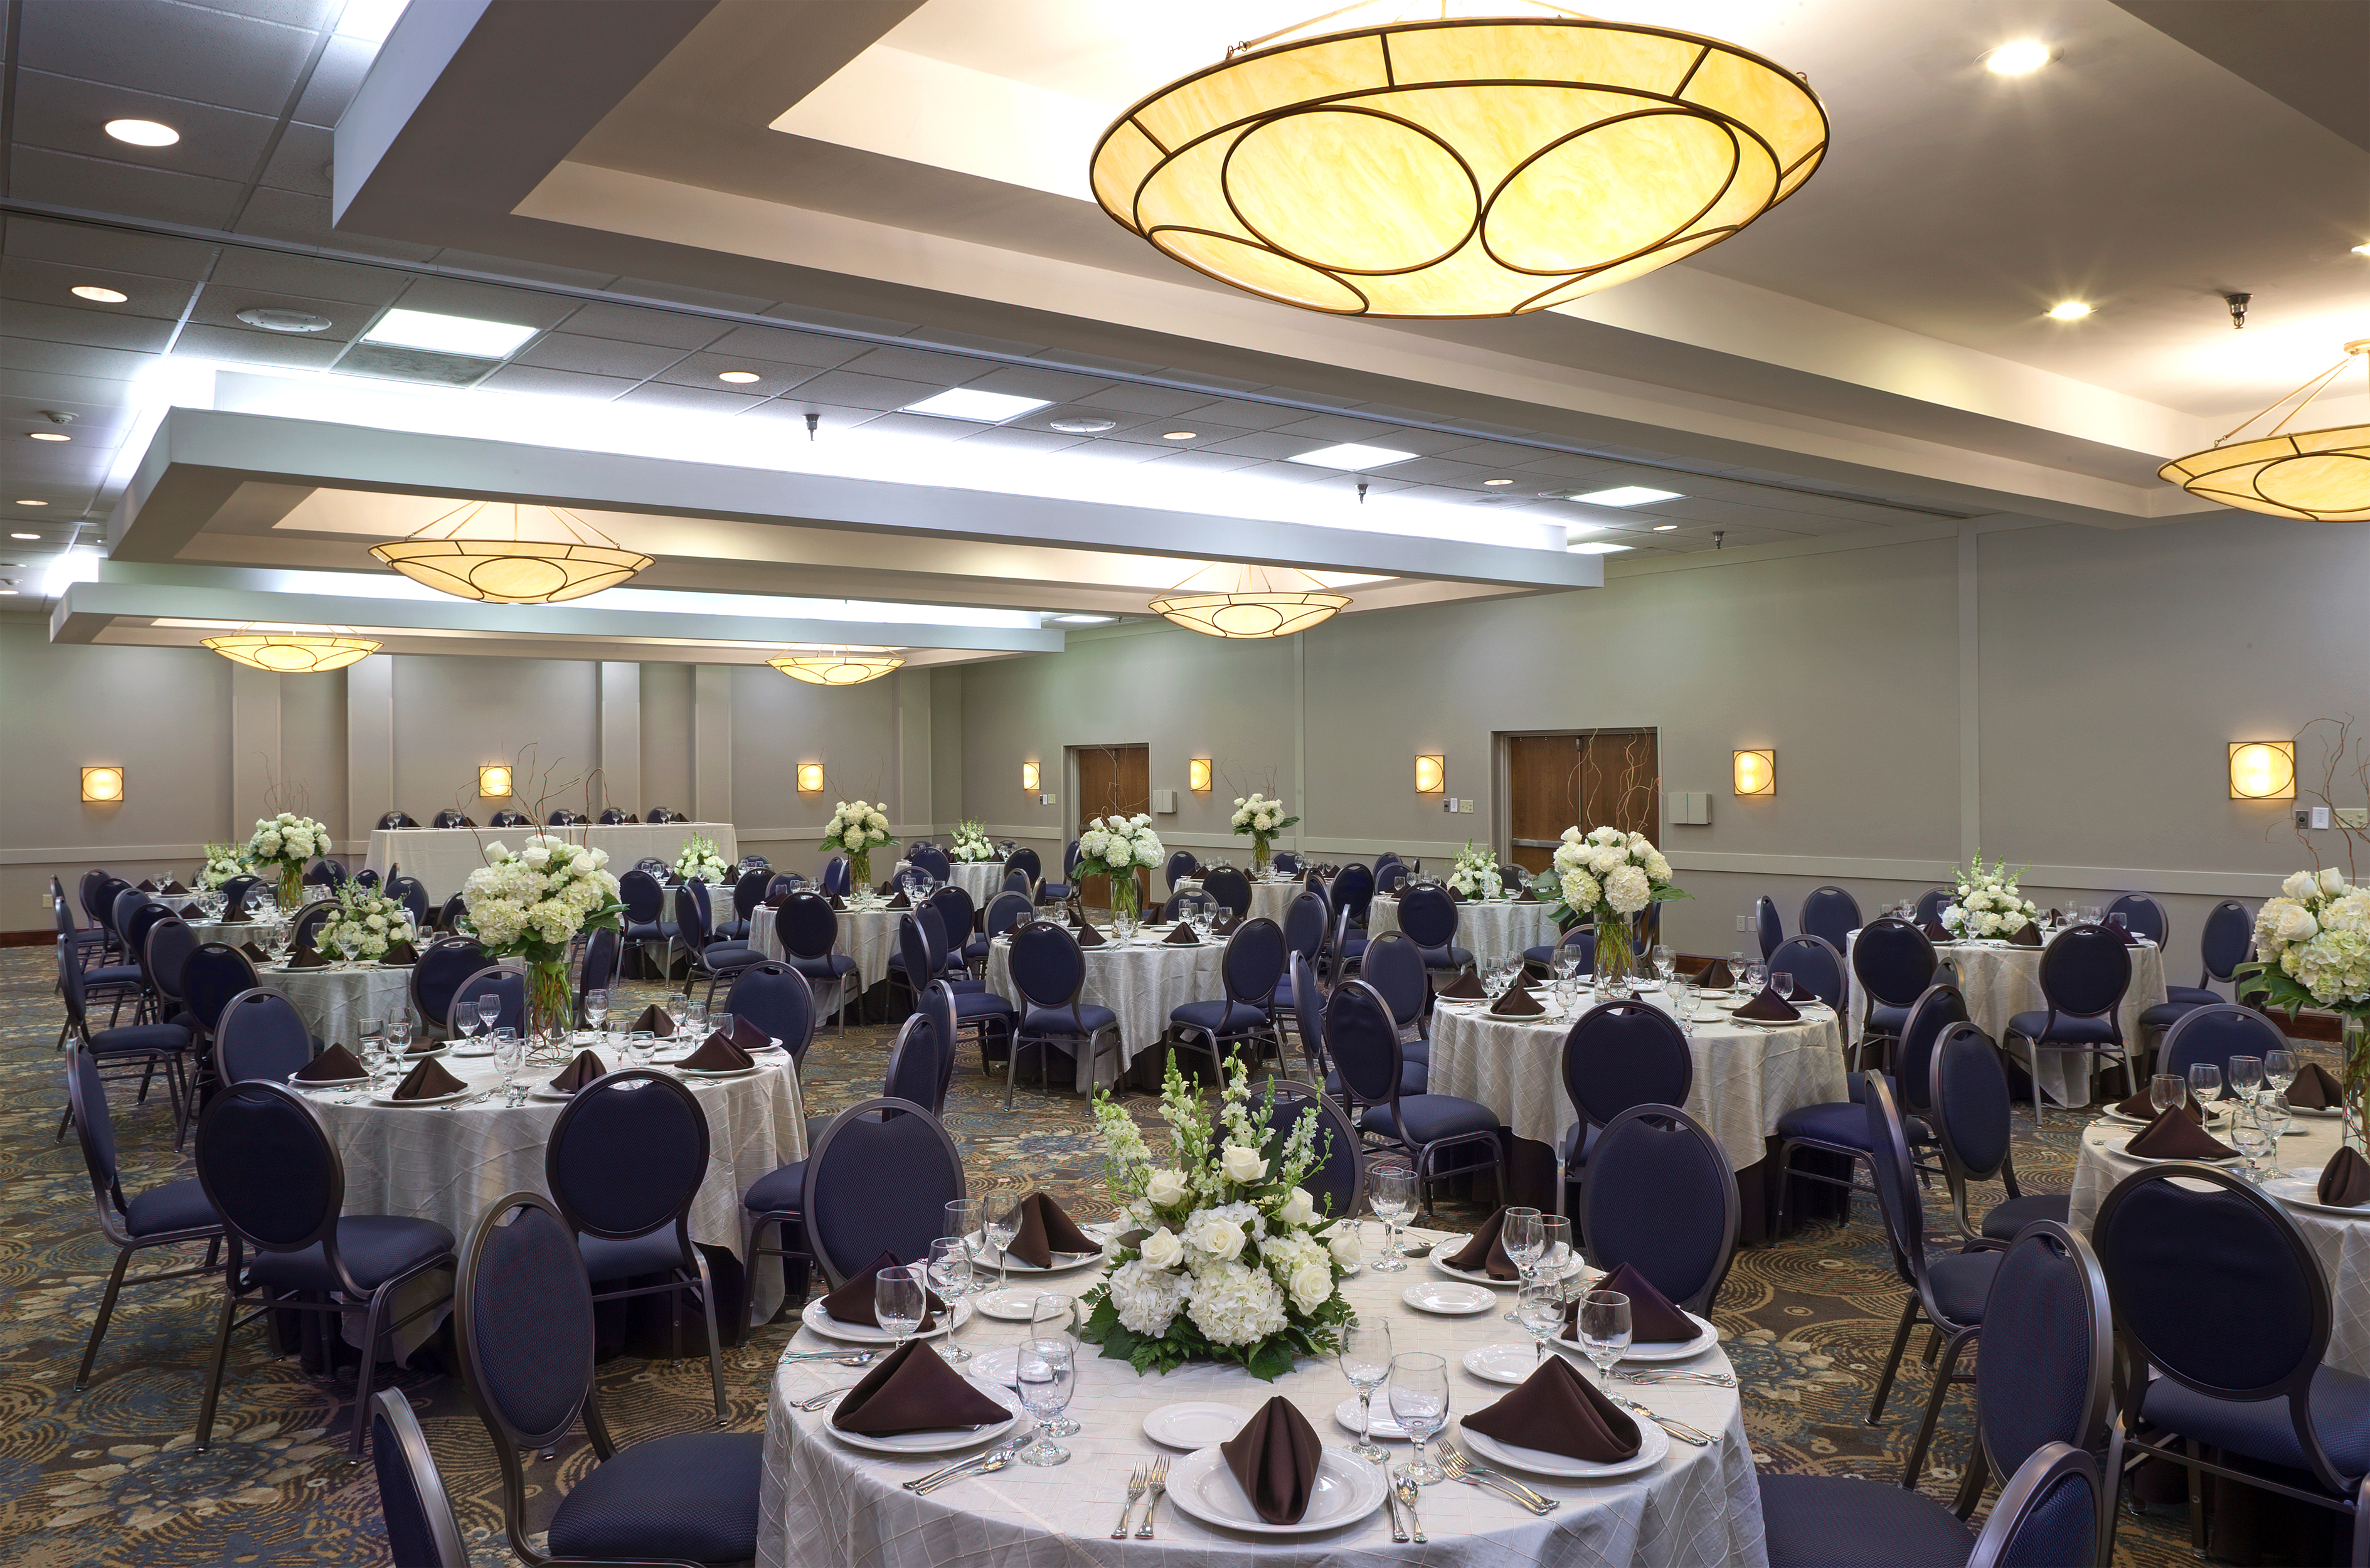 Banquet Event Space